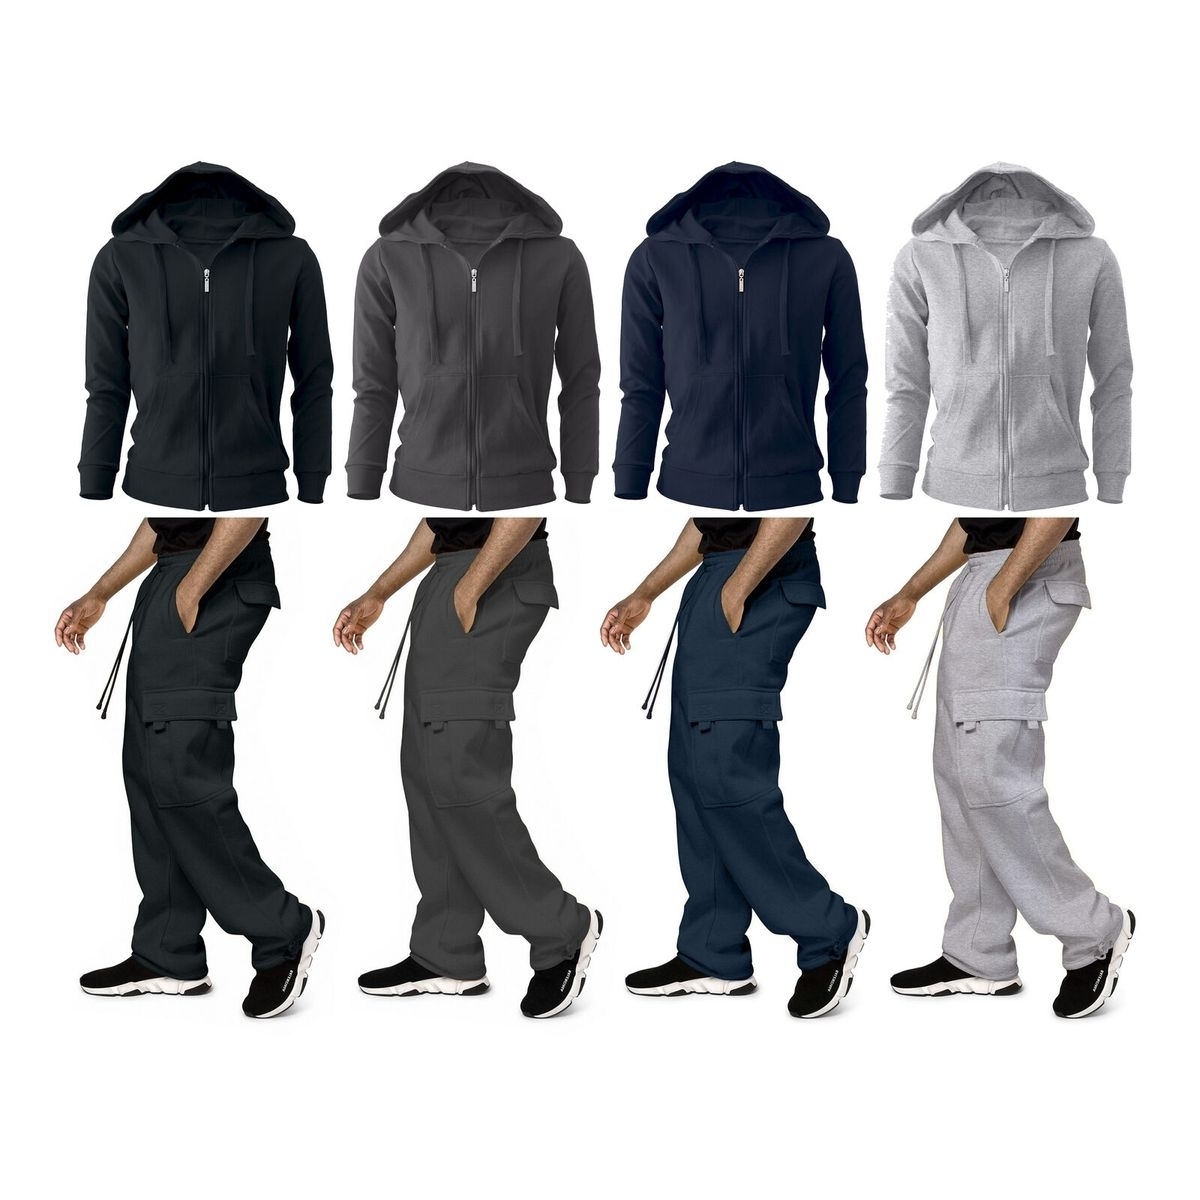 Men's Big & Tall Winter Warm Athletic Active Cozy Fleece Lined Multi-Pocket Full Zip Up Cargo Tracksuit - Black, Medium